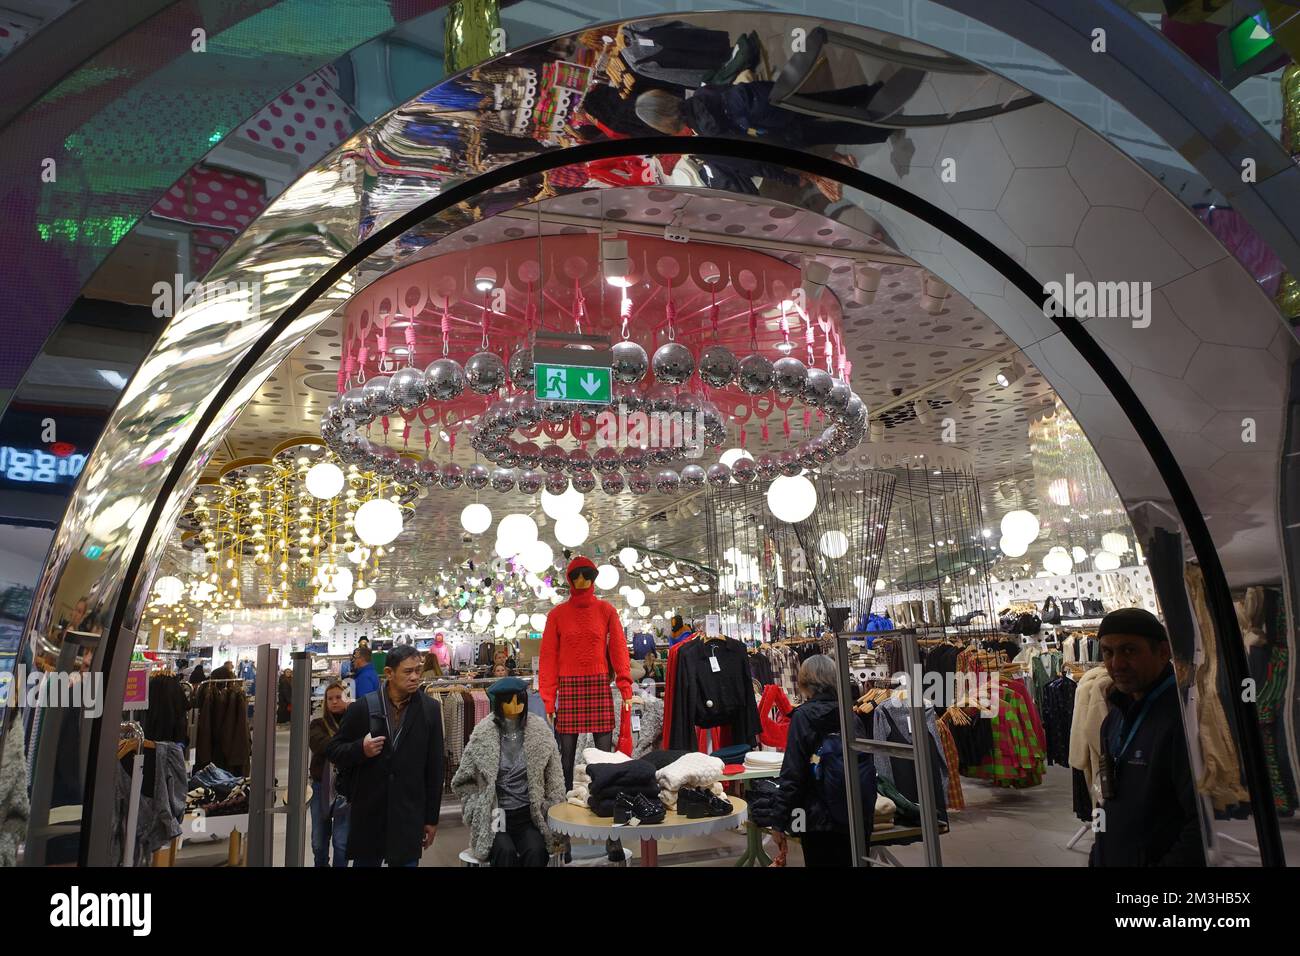 Glitzy shop lighting and displays Stock Photo